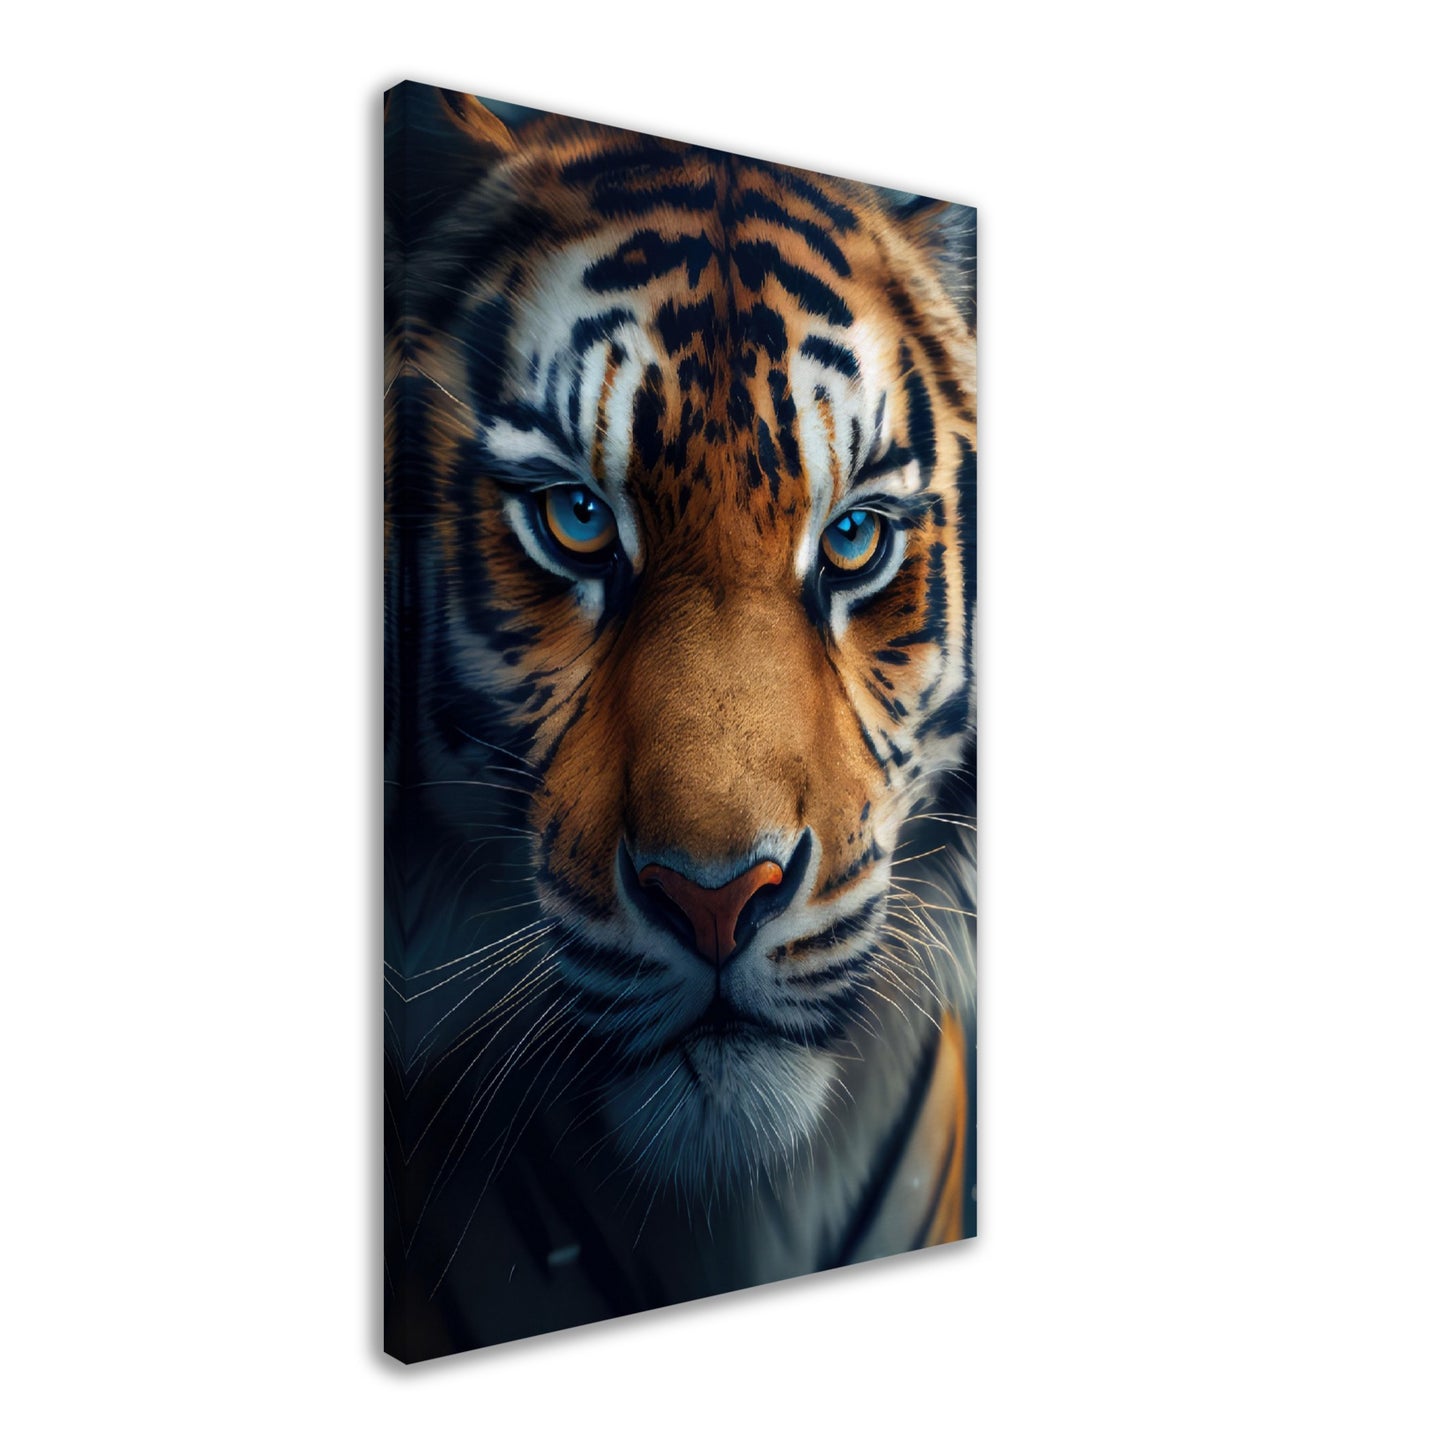 Tiger Mystery - Tiger Wandbild - Animals Close Up Leinwand ColorWorld im Hochformat - Coole Tier-Porträts & Animals Kunstdruck